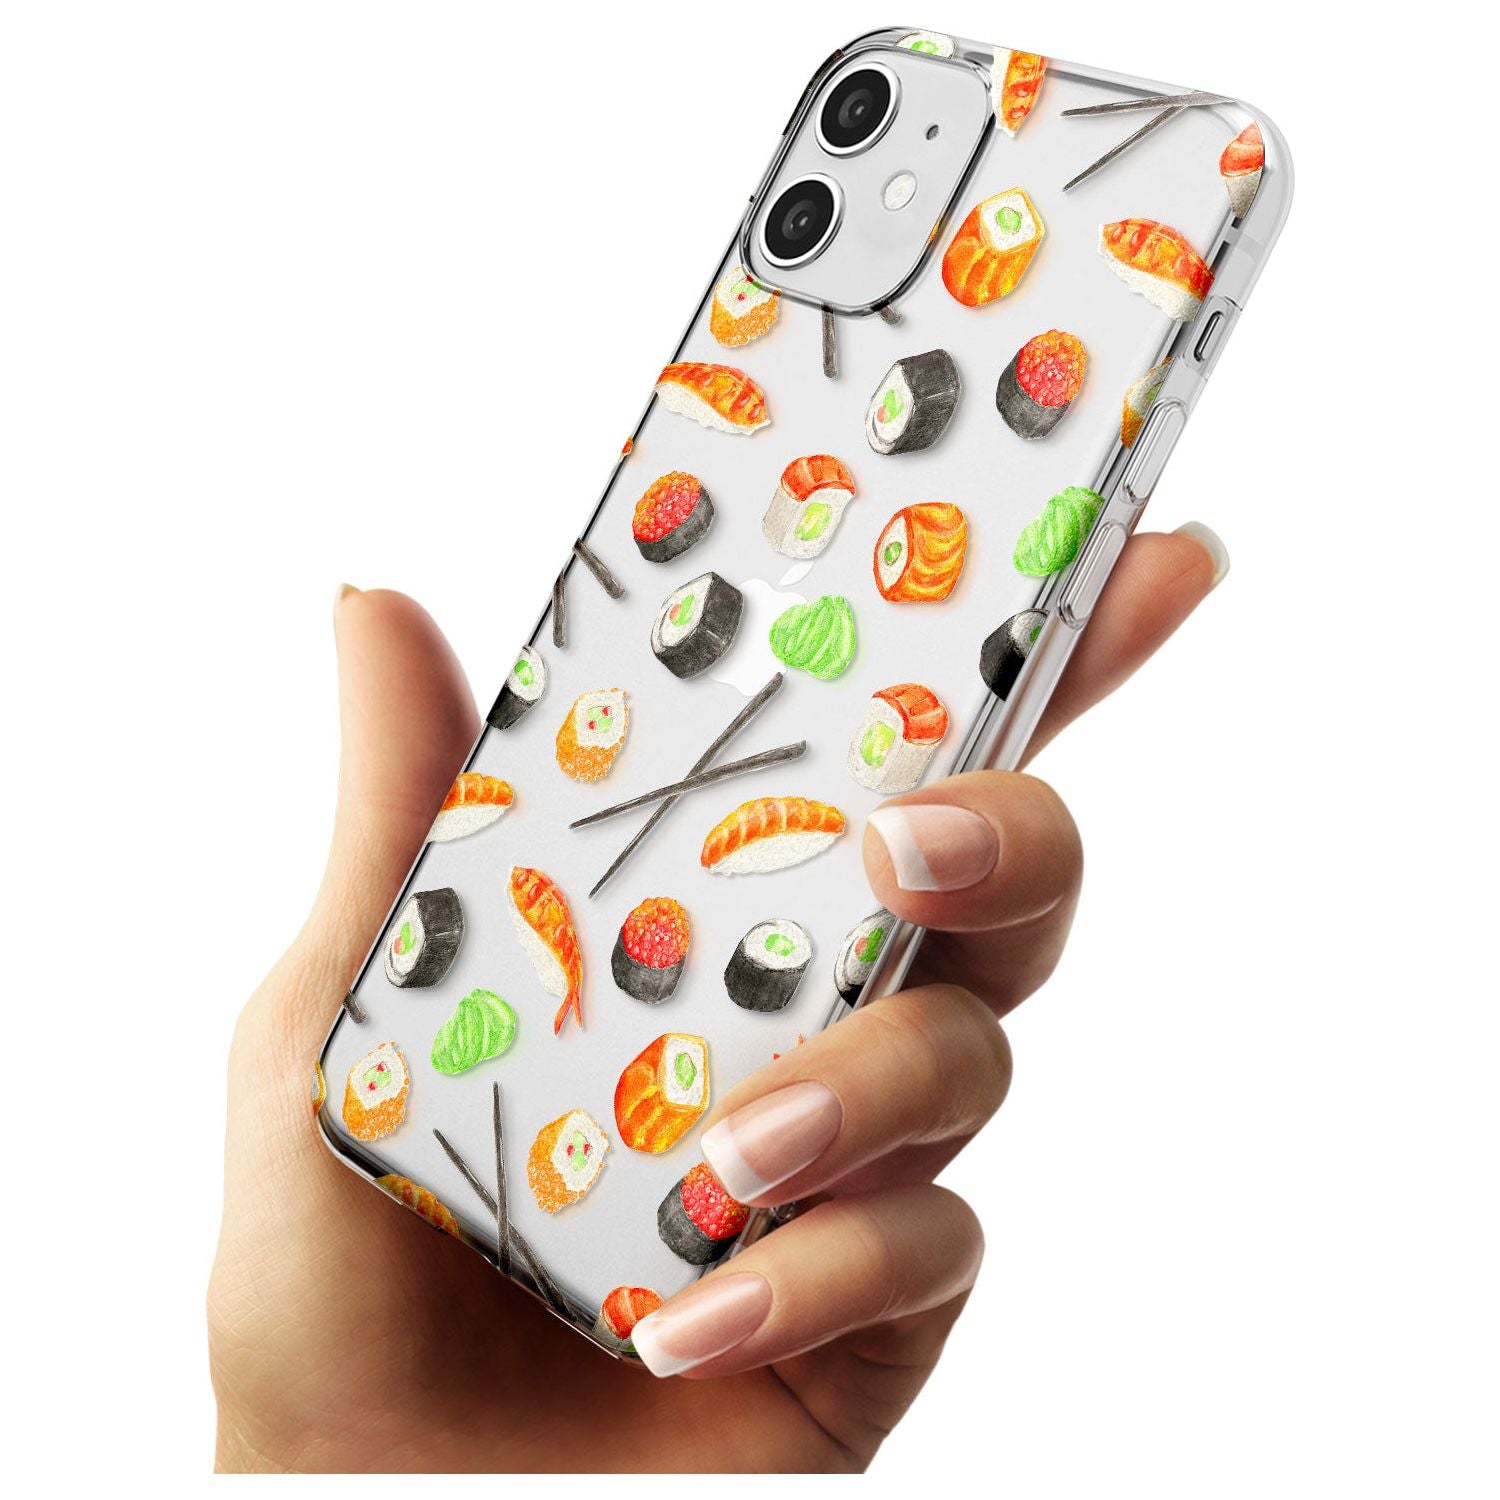 Sushi & Chopsticks Watercolour Pattern Slim TPU Phone Case for iPhone 11